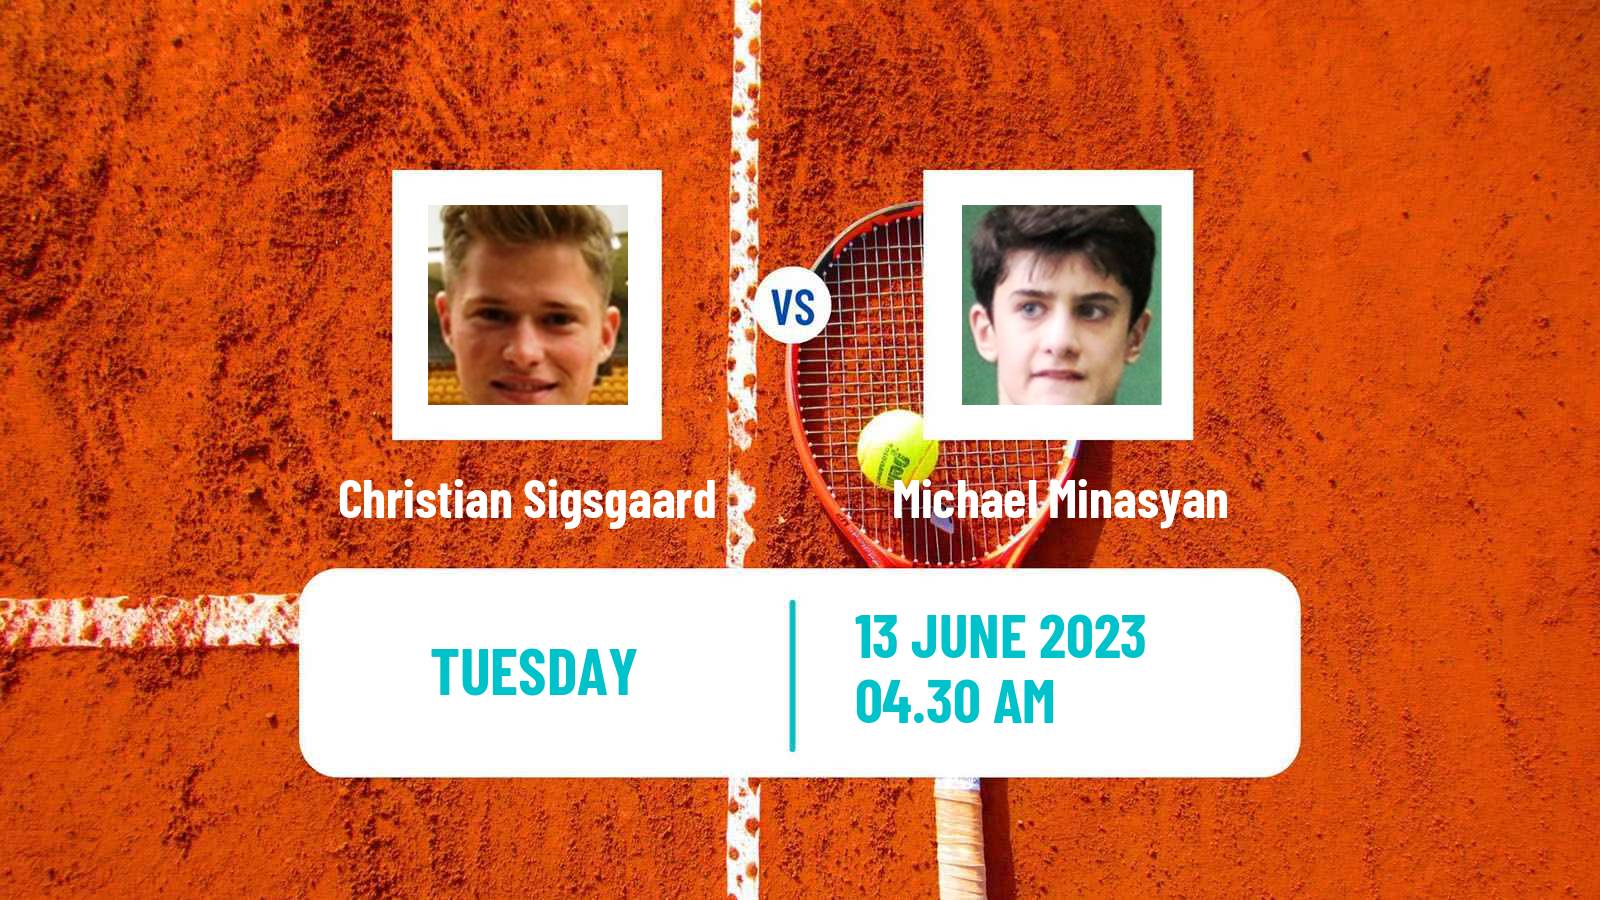 Tennis ITF M25 Risskov Aarhus Men Christian Sigsgaard - Michael Minasyan